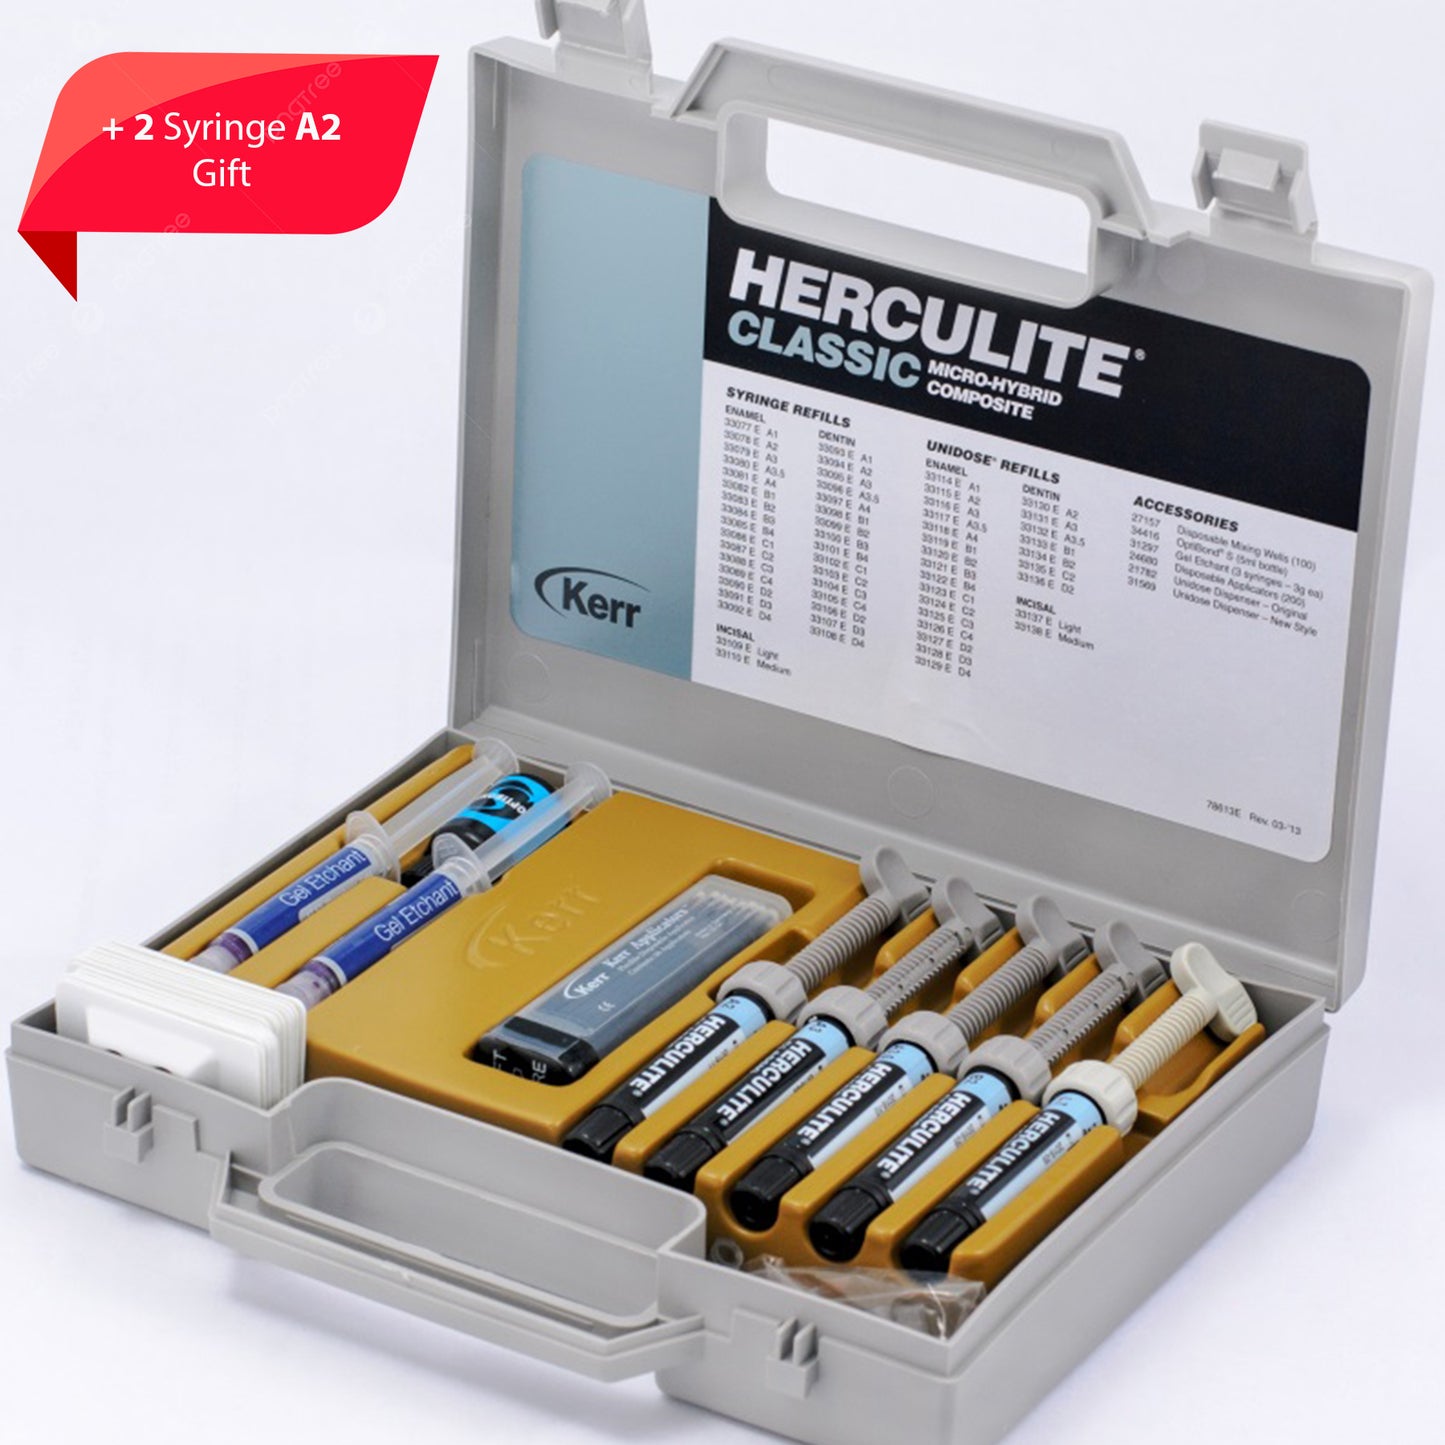 Herculite Classic Micro Hibrit Composite Standart Set + 2 Syringe A2 Gift